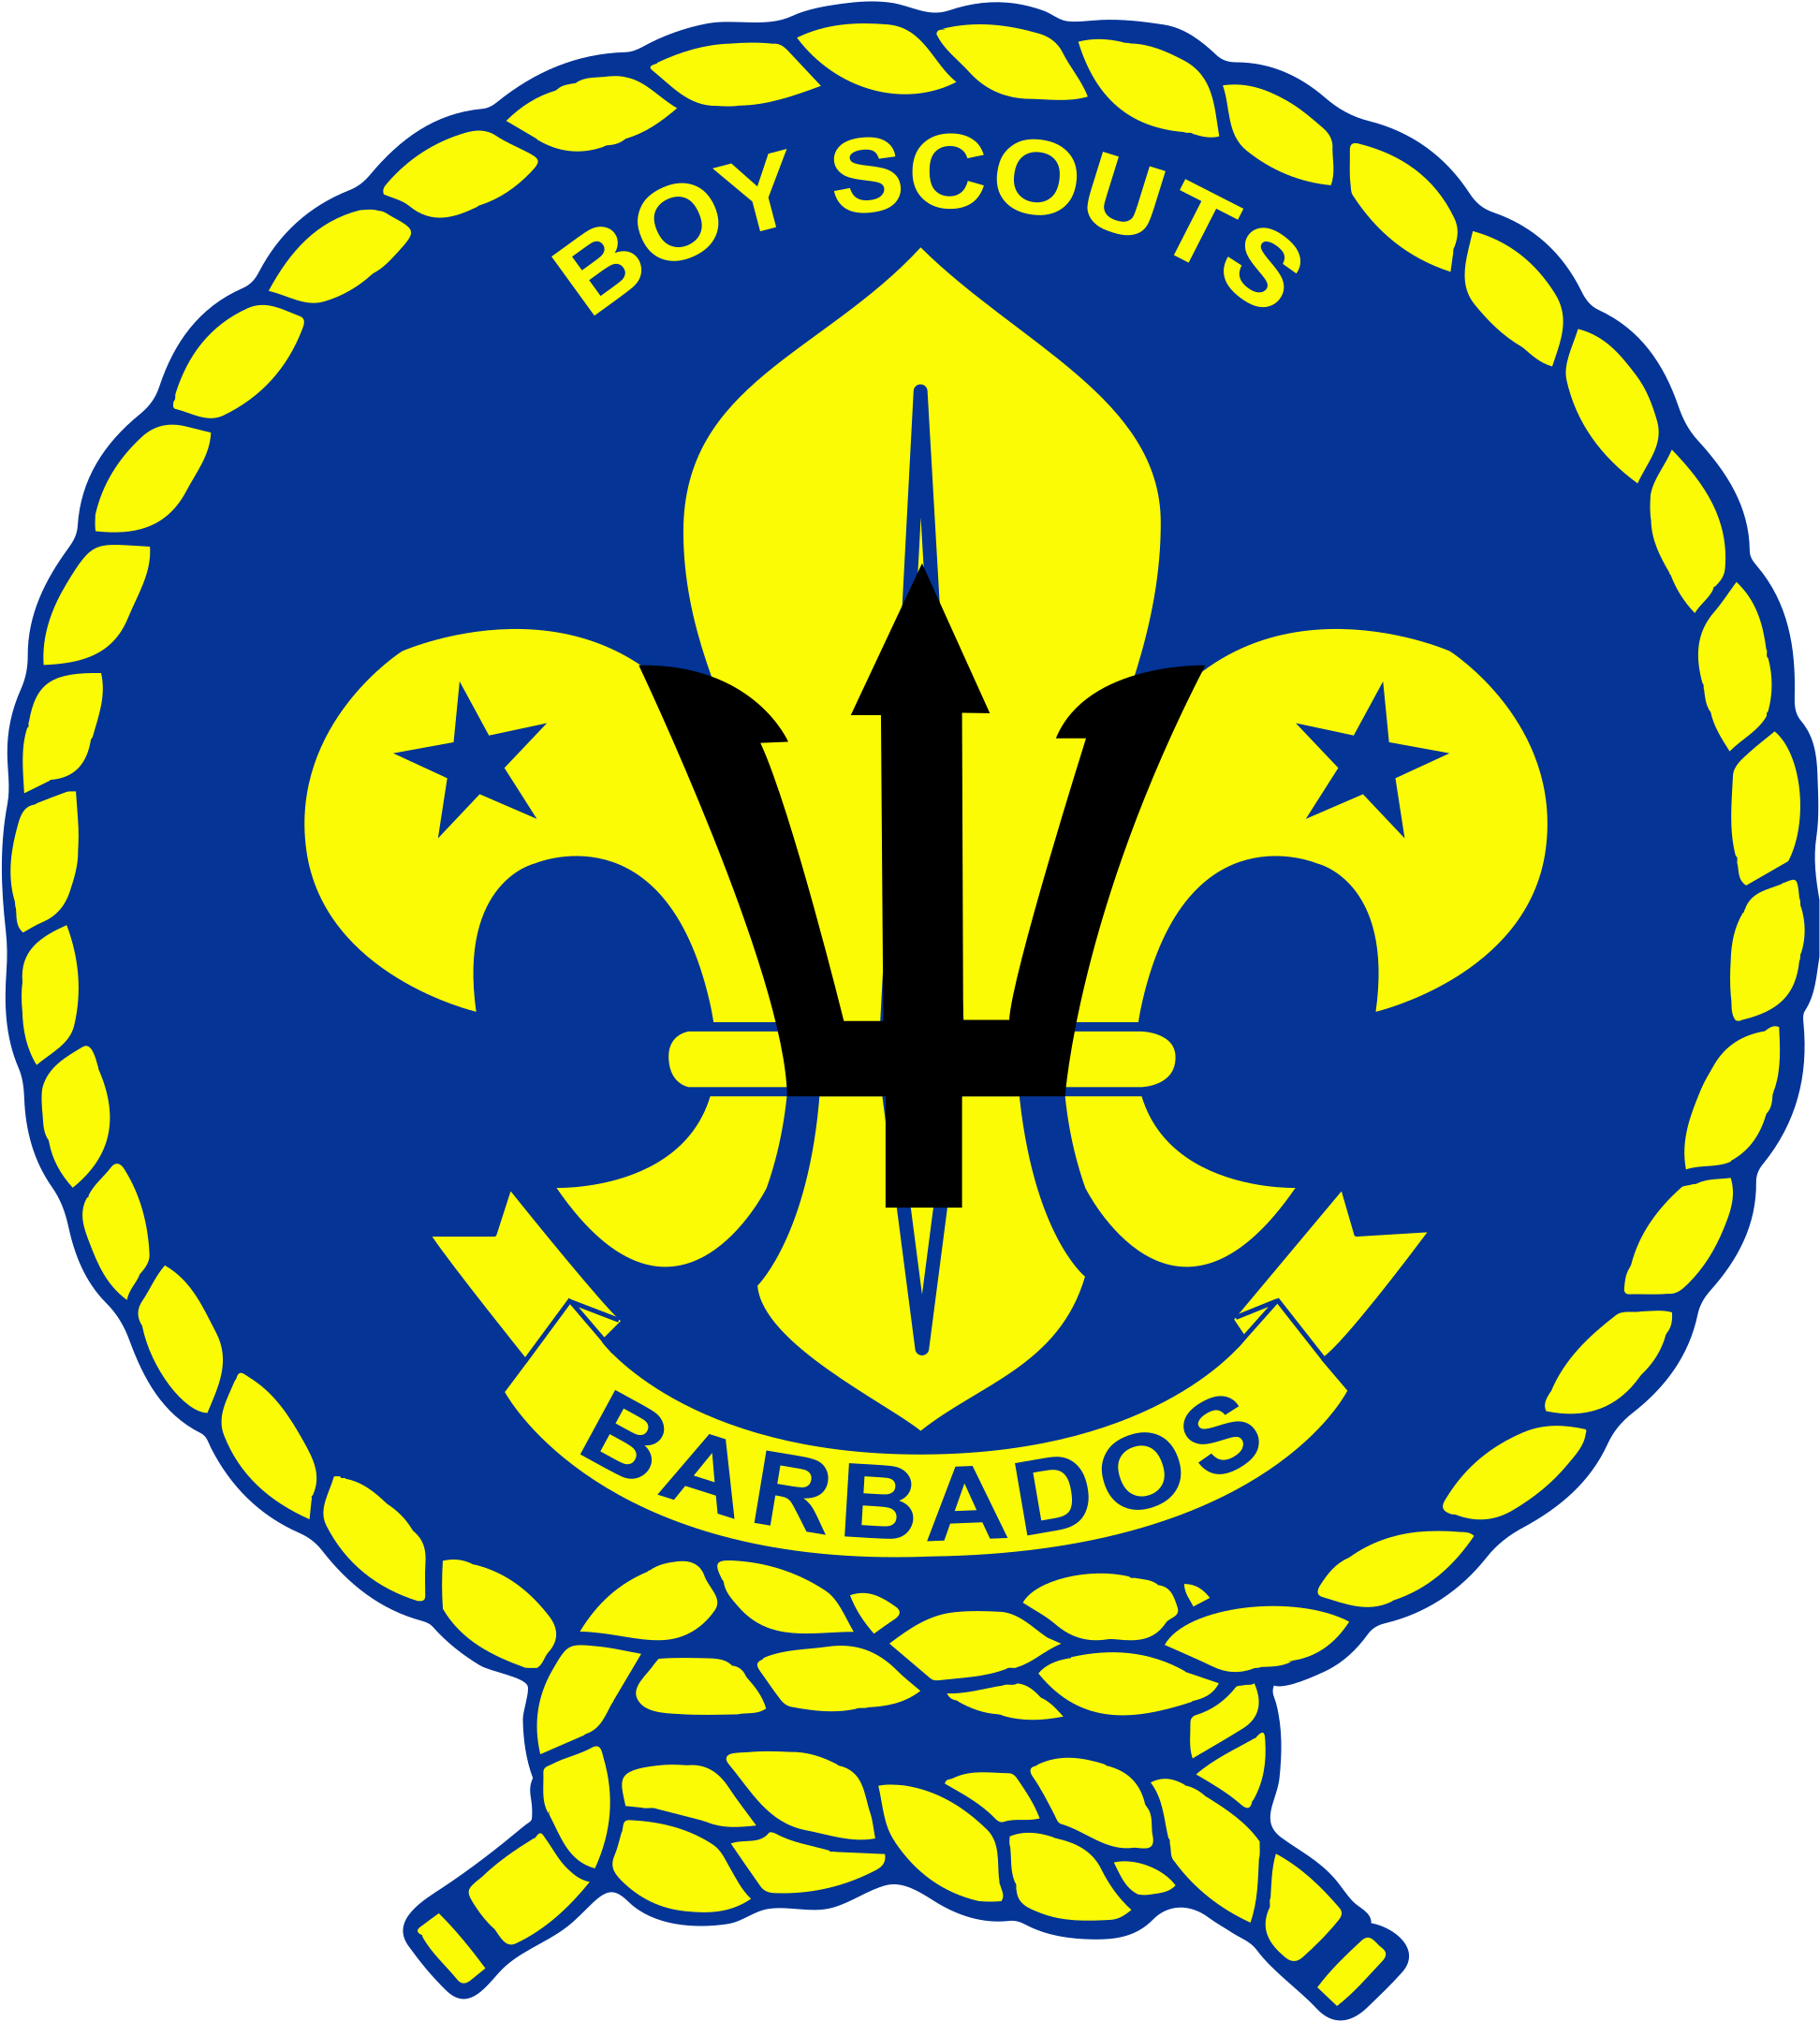 Bosnia And Herzegovina - Barbados Boy Scouts Association (2000x2238)